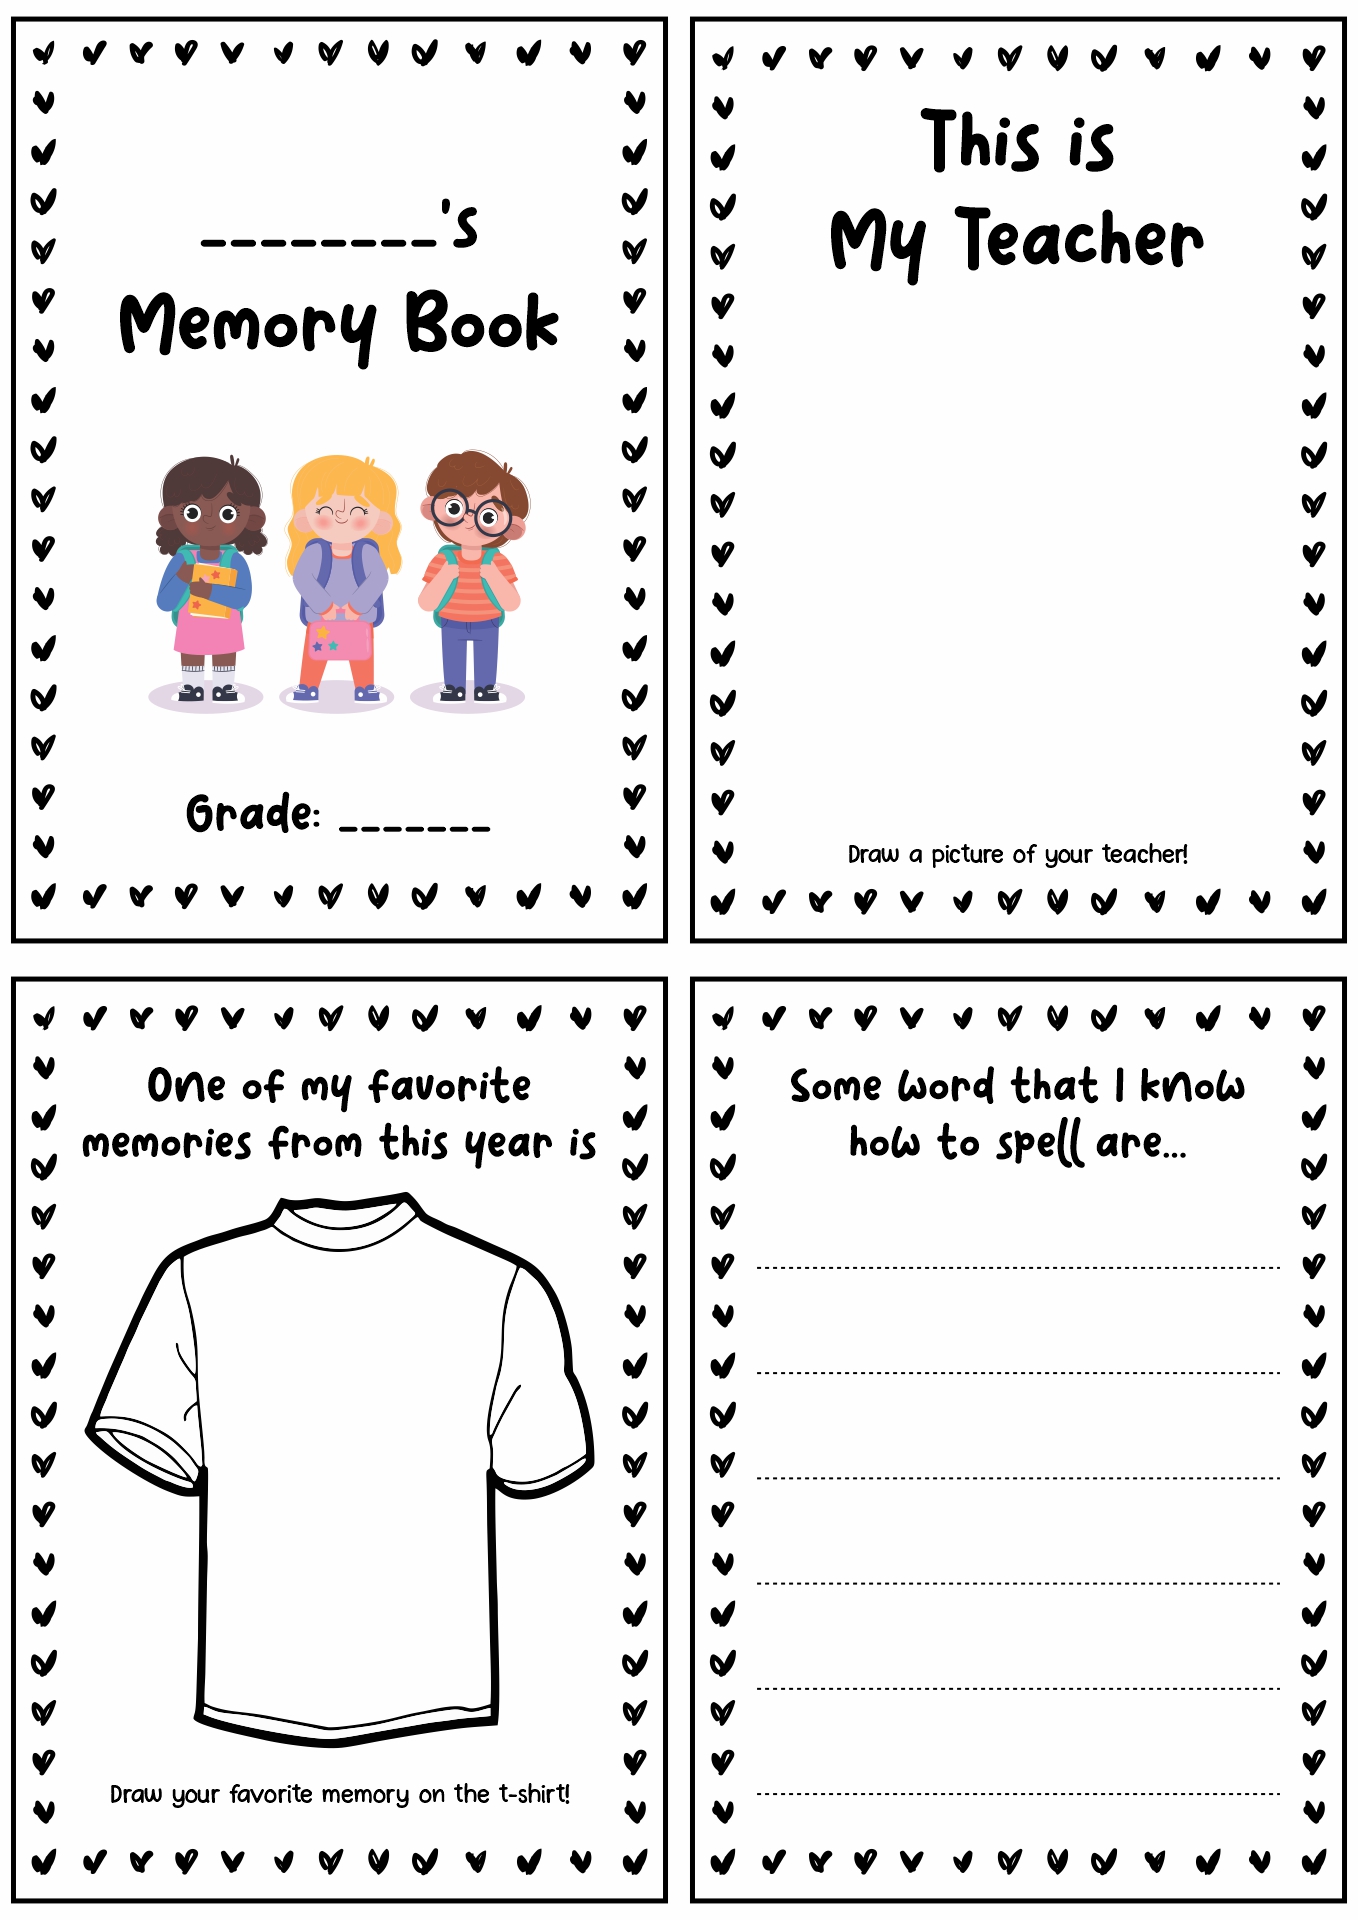 My Preschool Memory Book Printable Image